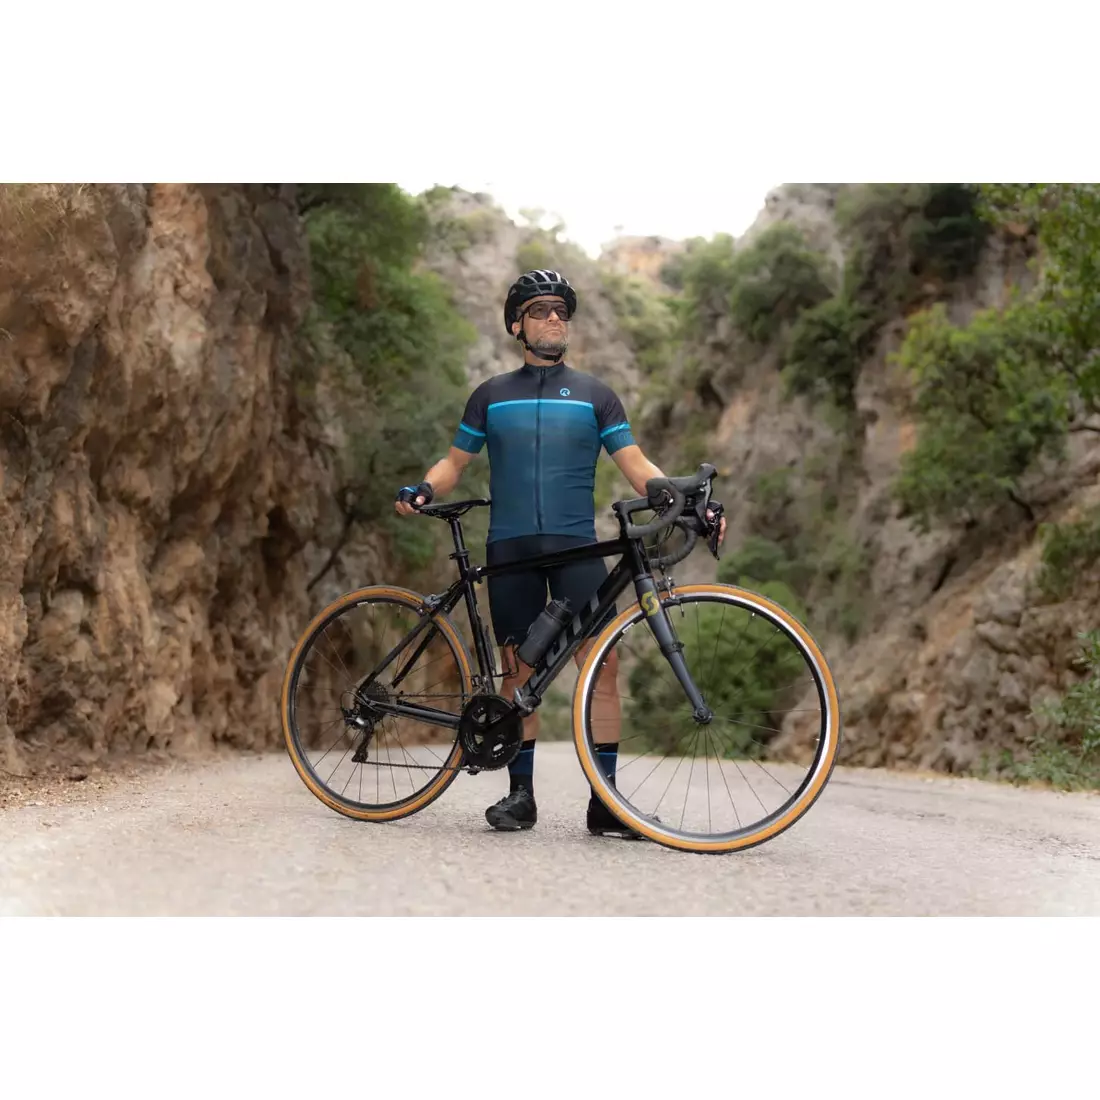 Rogelli HERO II men's cycling jersey, black and blue